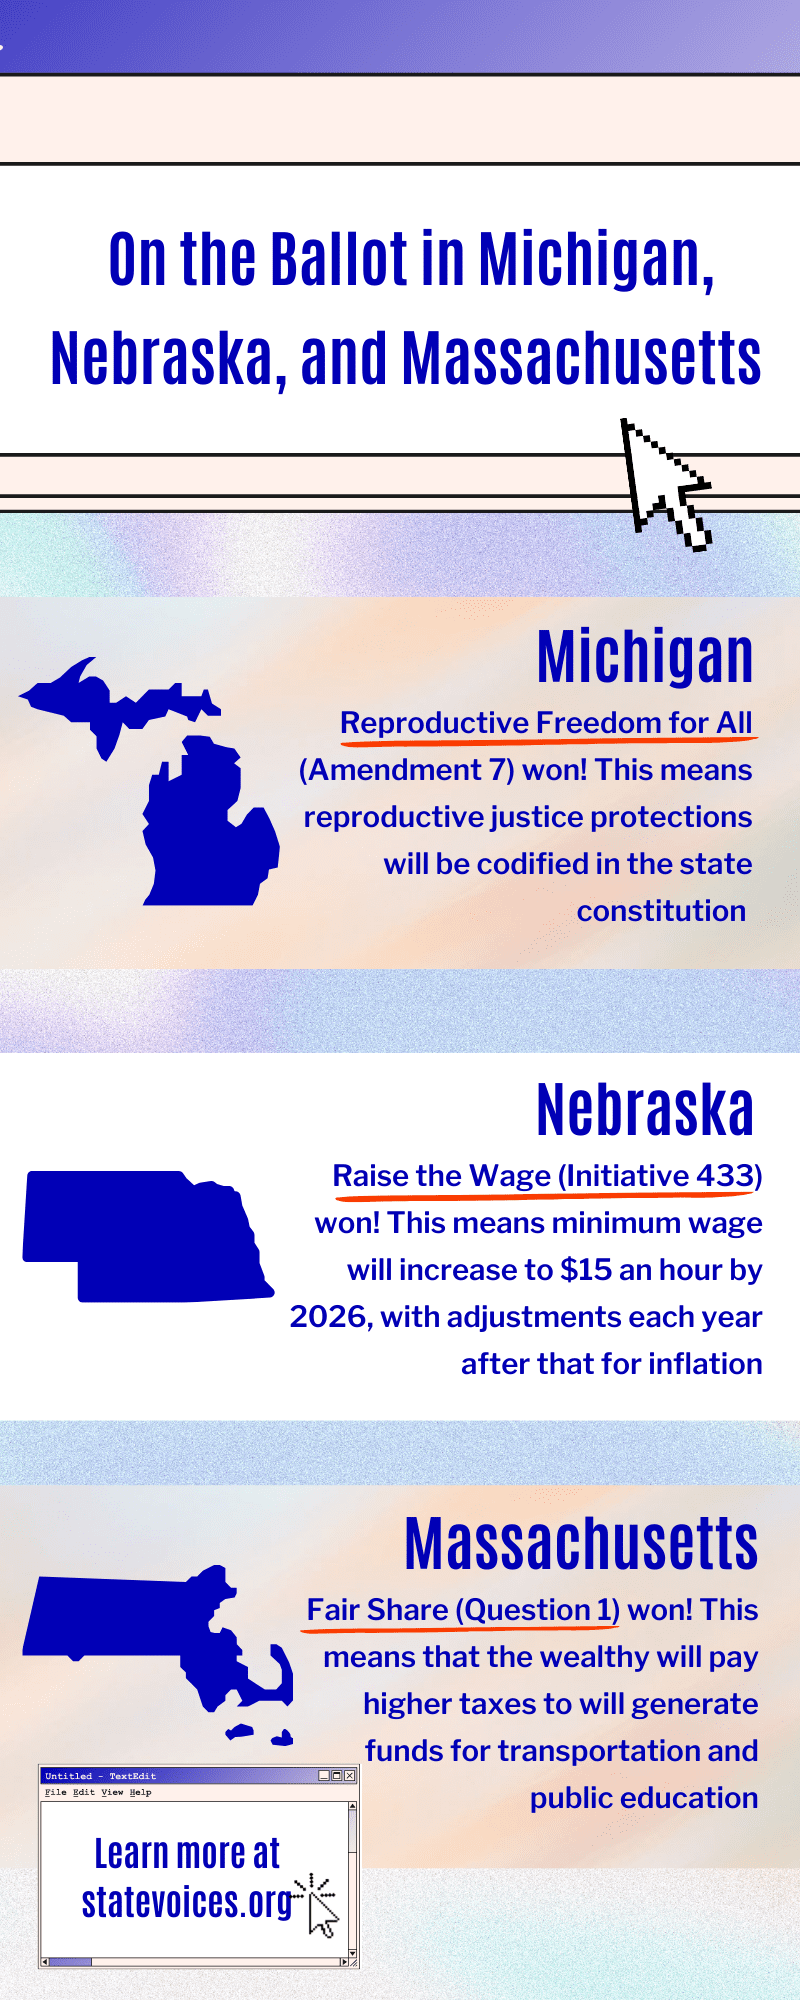 On the ballot in Michigan, Nebraska and Massachusettes